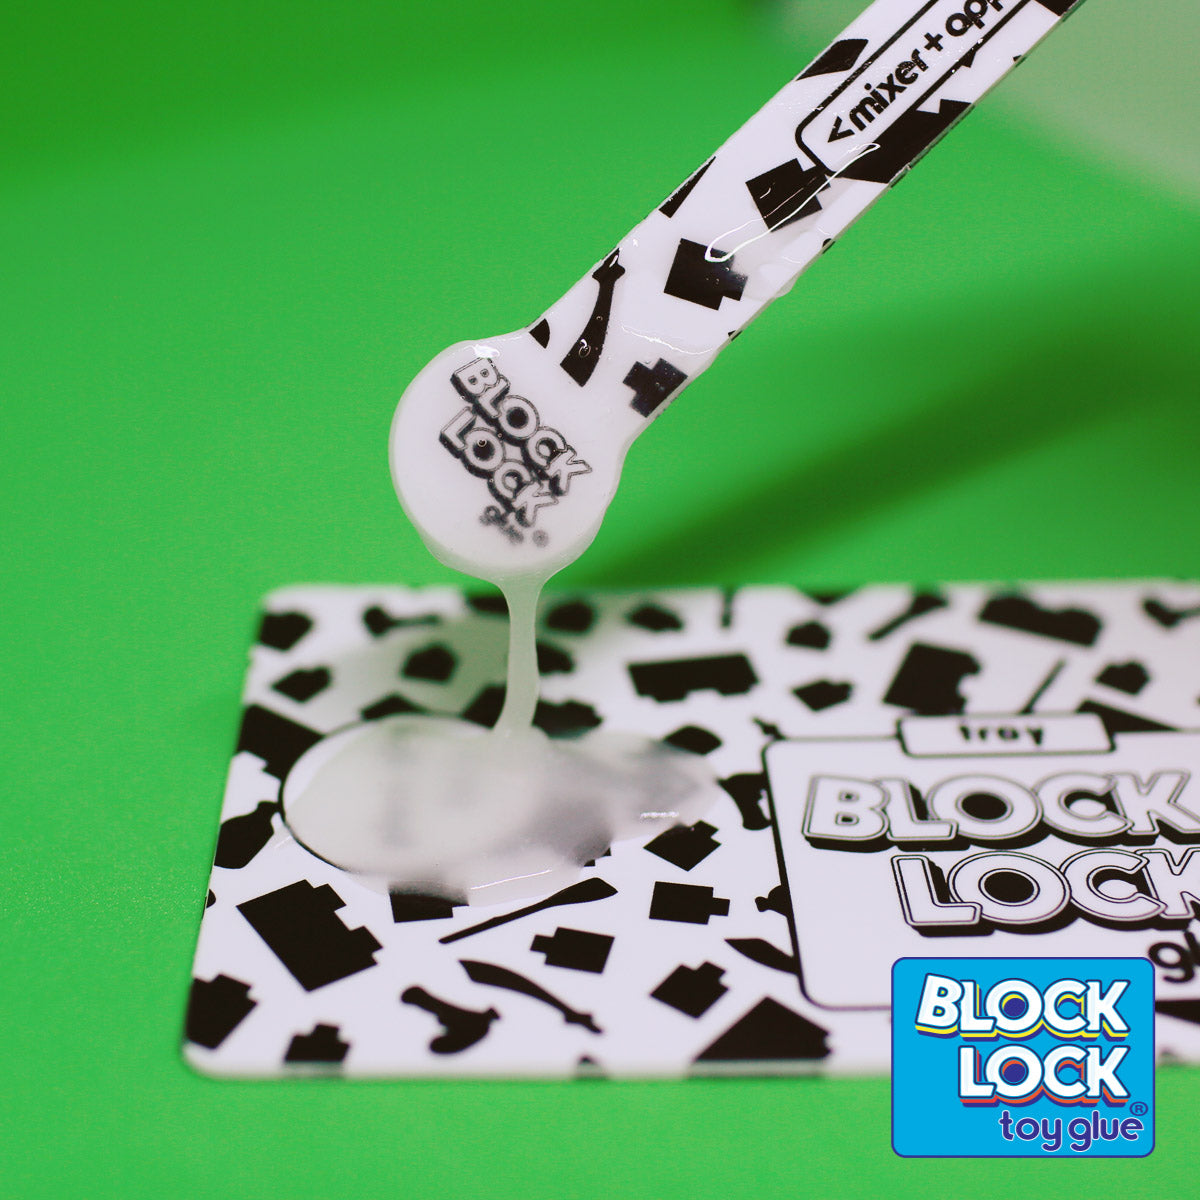 BLOCK LOCK Toy Glue SPOUT POUCH 50ml - pour Toy BRICKS + BLOCKS + LEGO